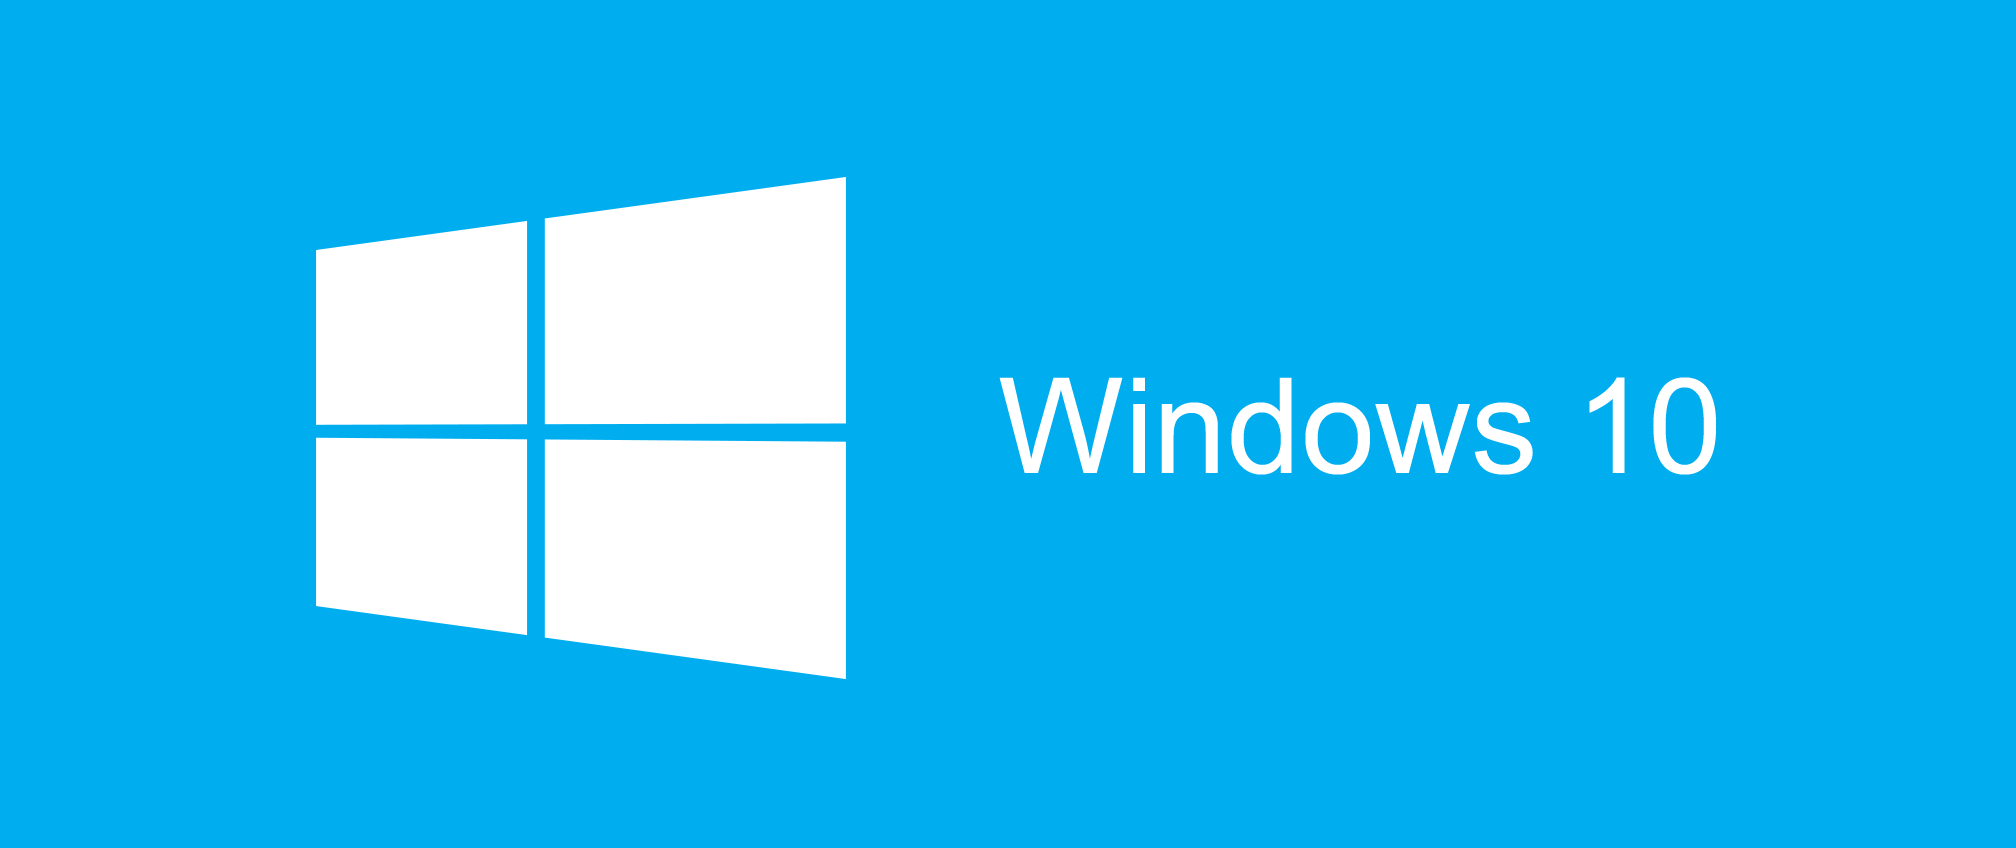 Microsoft Windows 10 Logo - Windows 10 Anniversary Update: New Features | ePosts